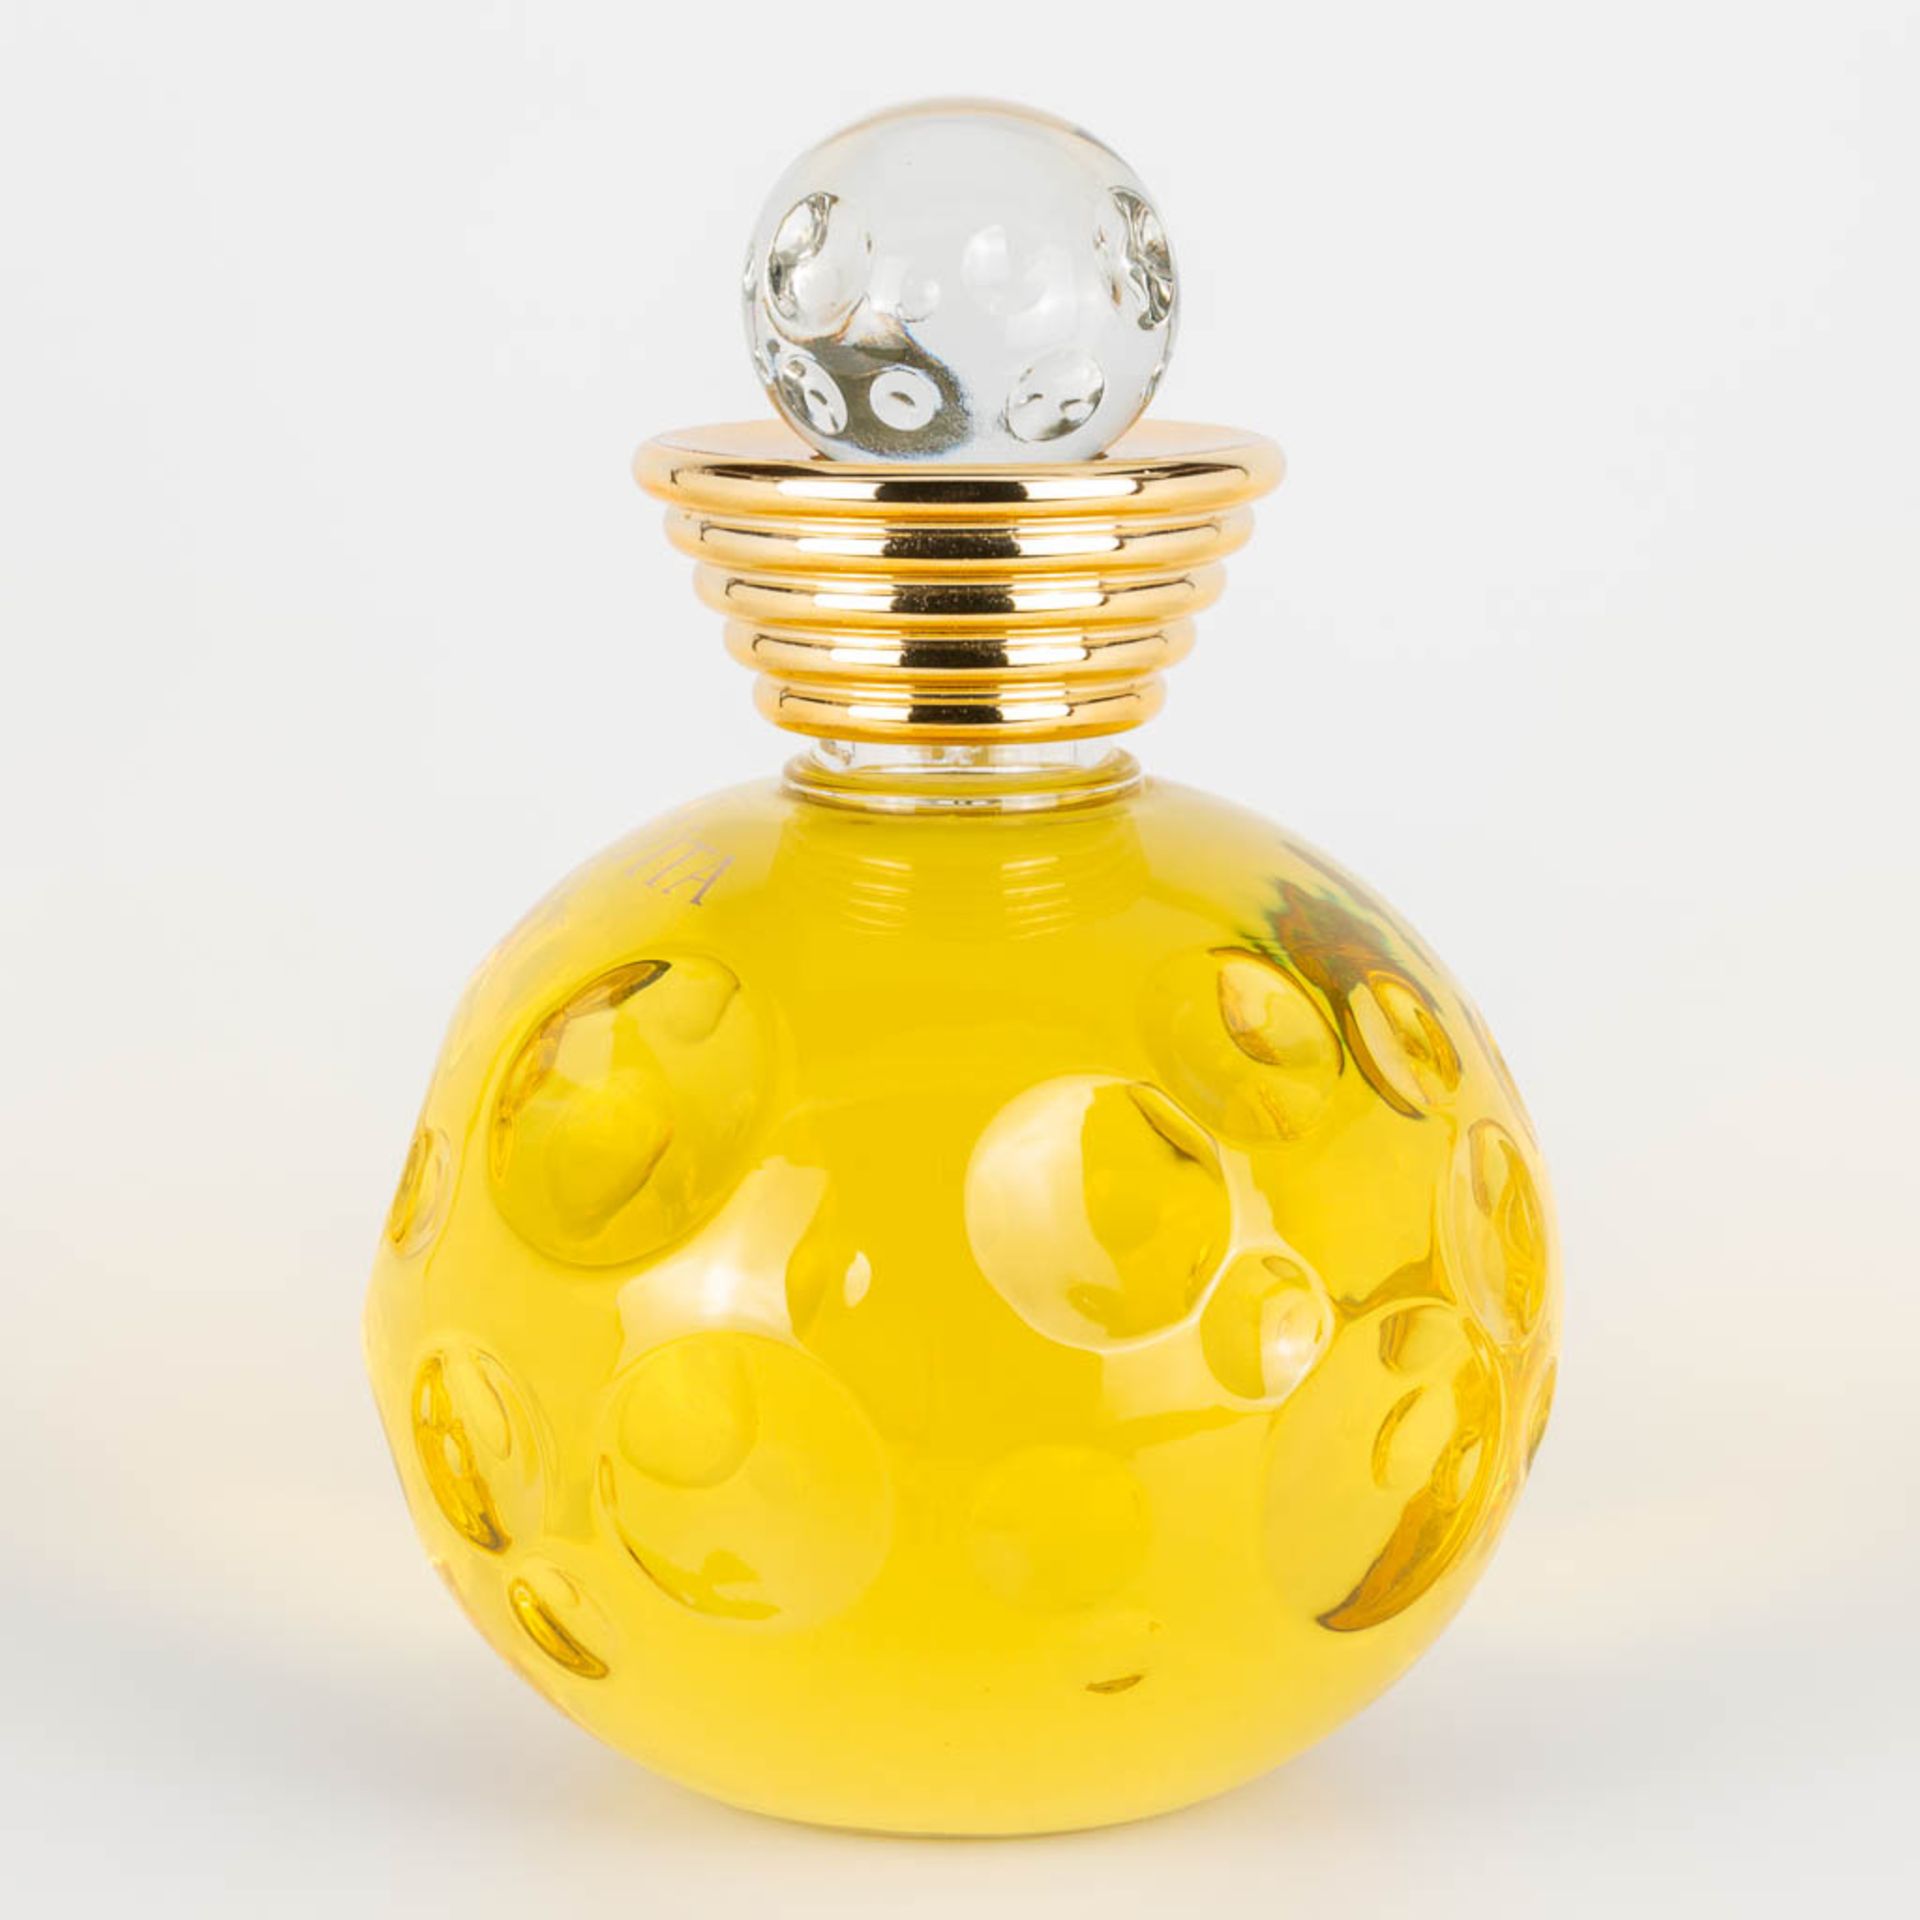 A large Dummy Perfume bottle 'La Dolce Vita' by Christian Dior. (35 x 24 cm) - Bild 5 aus 9